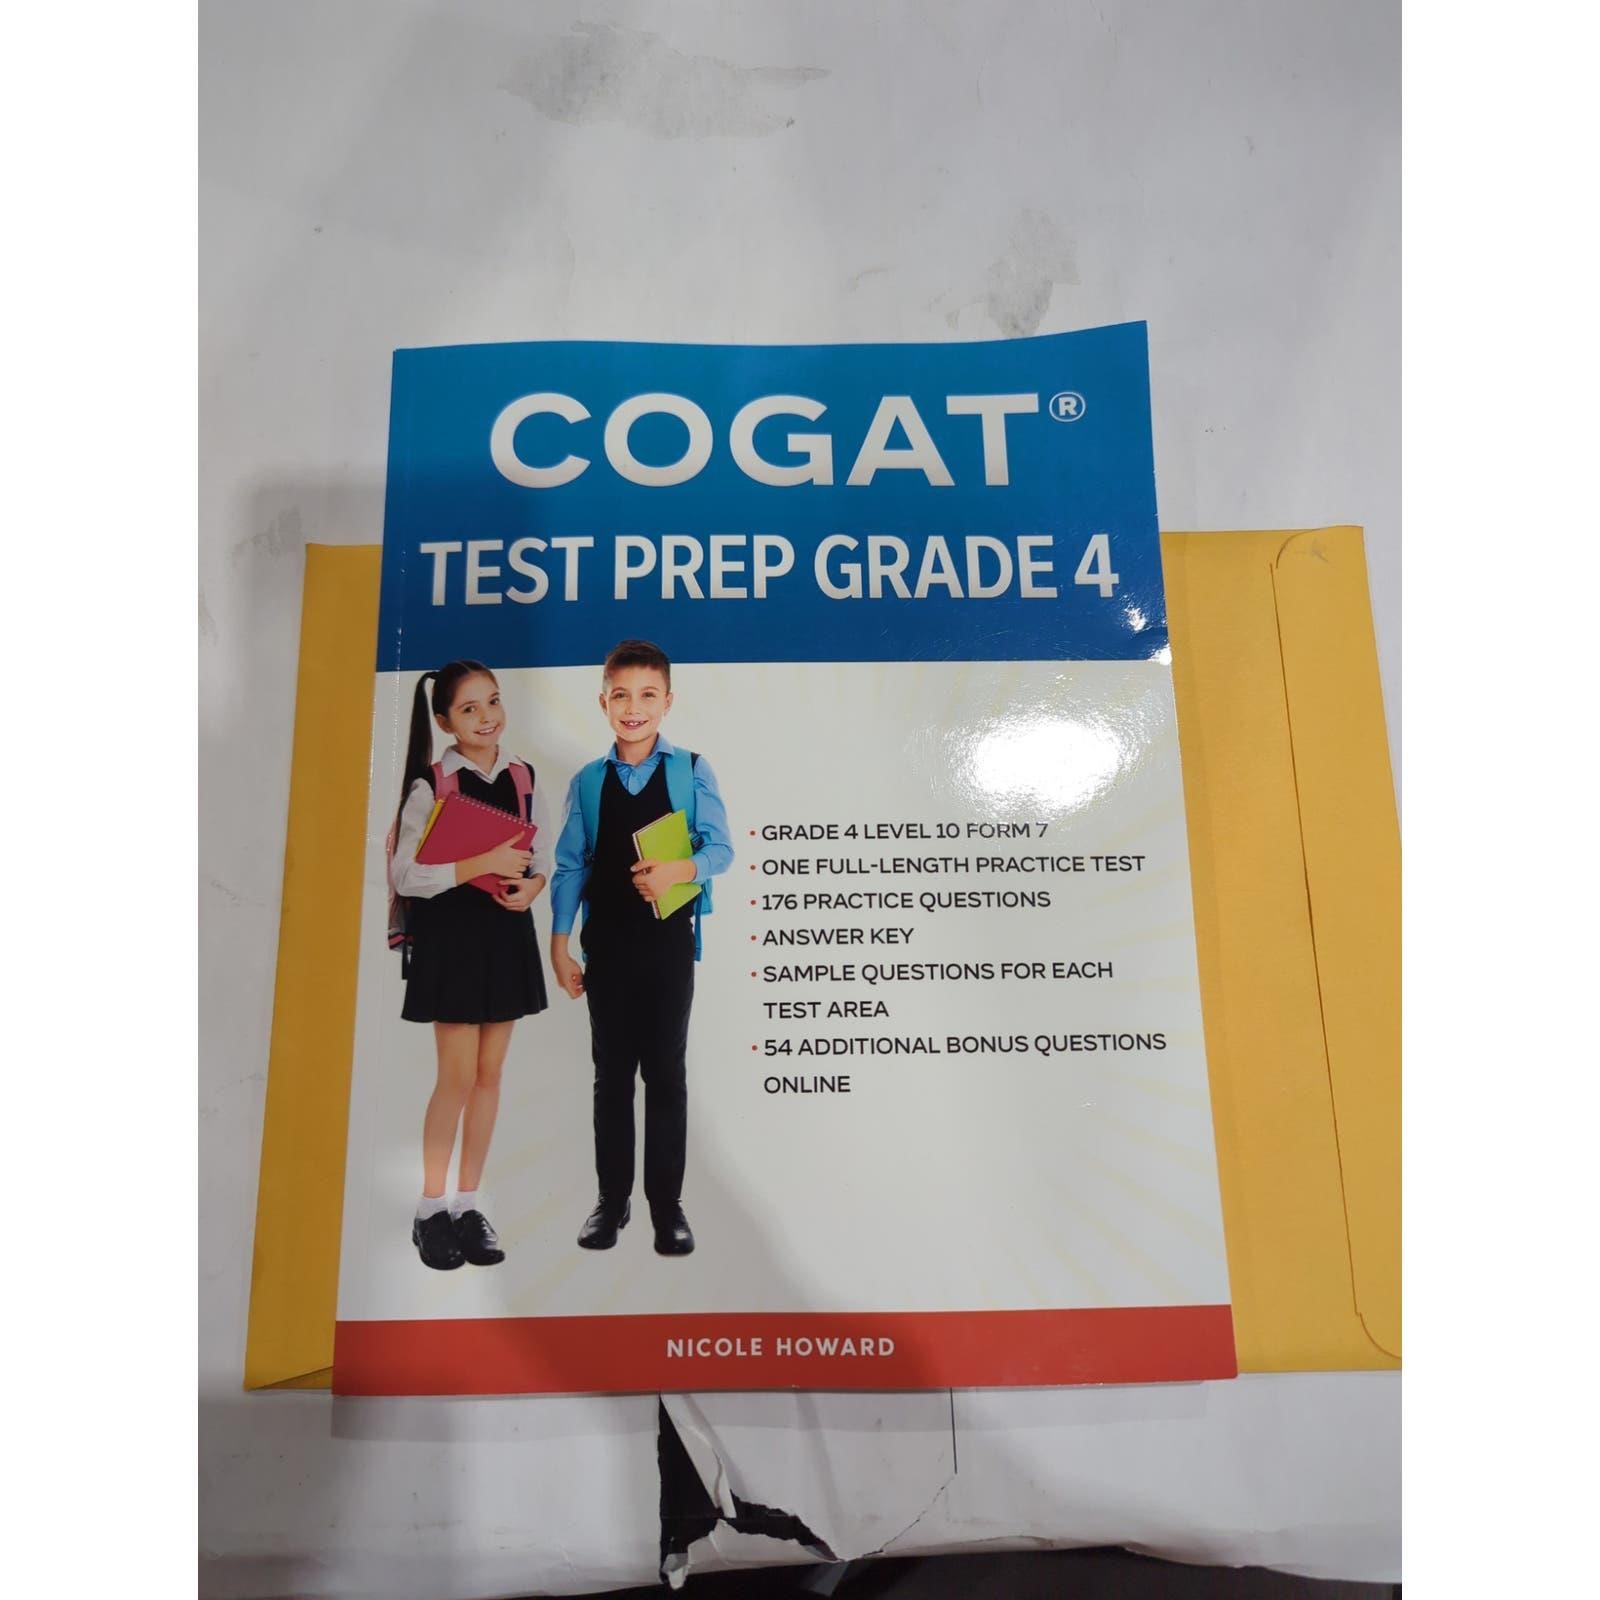 Cogat test prep grade 4